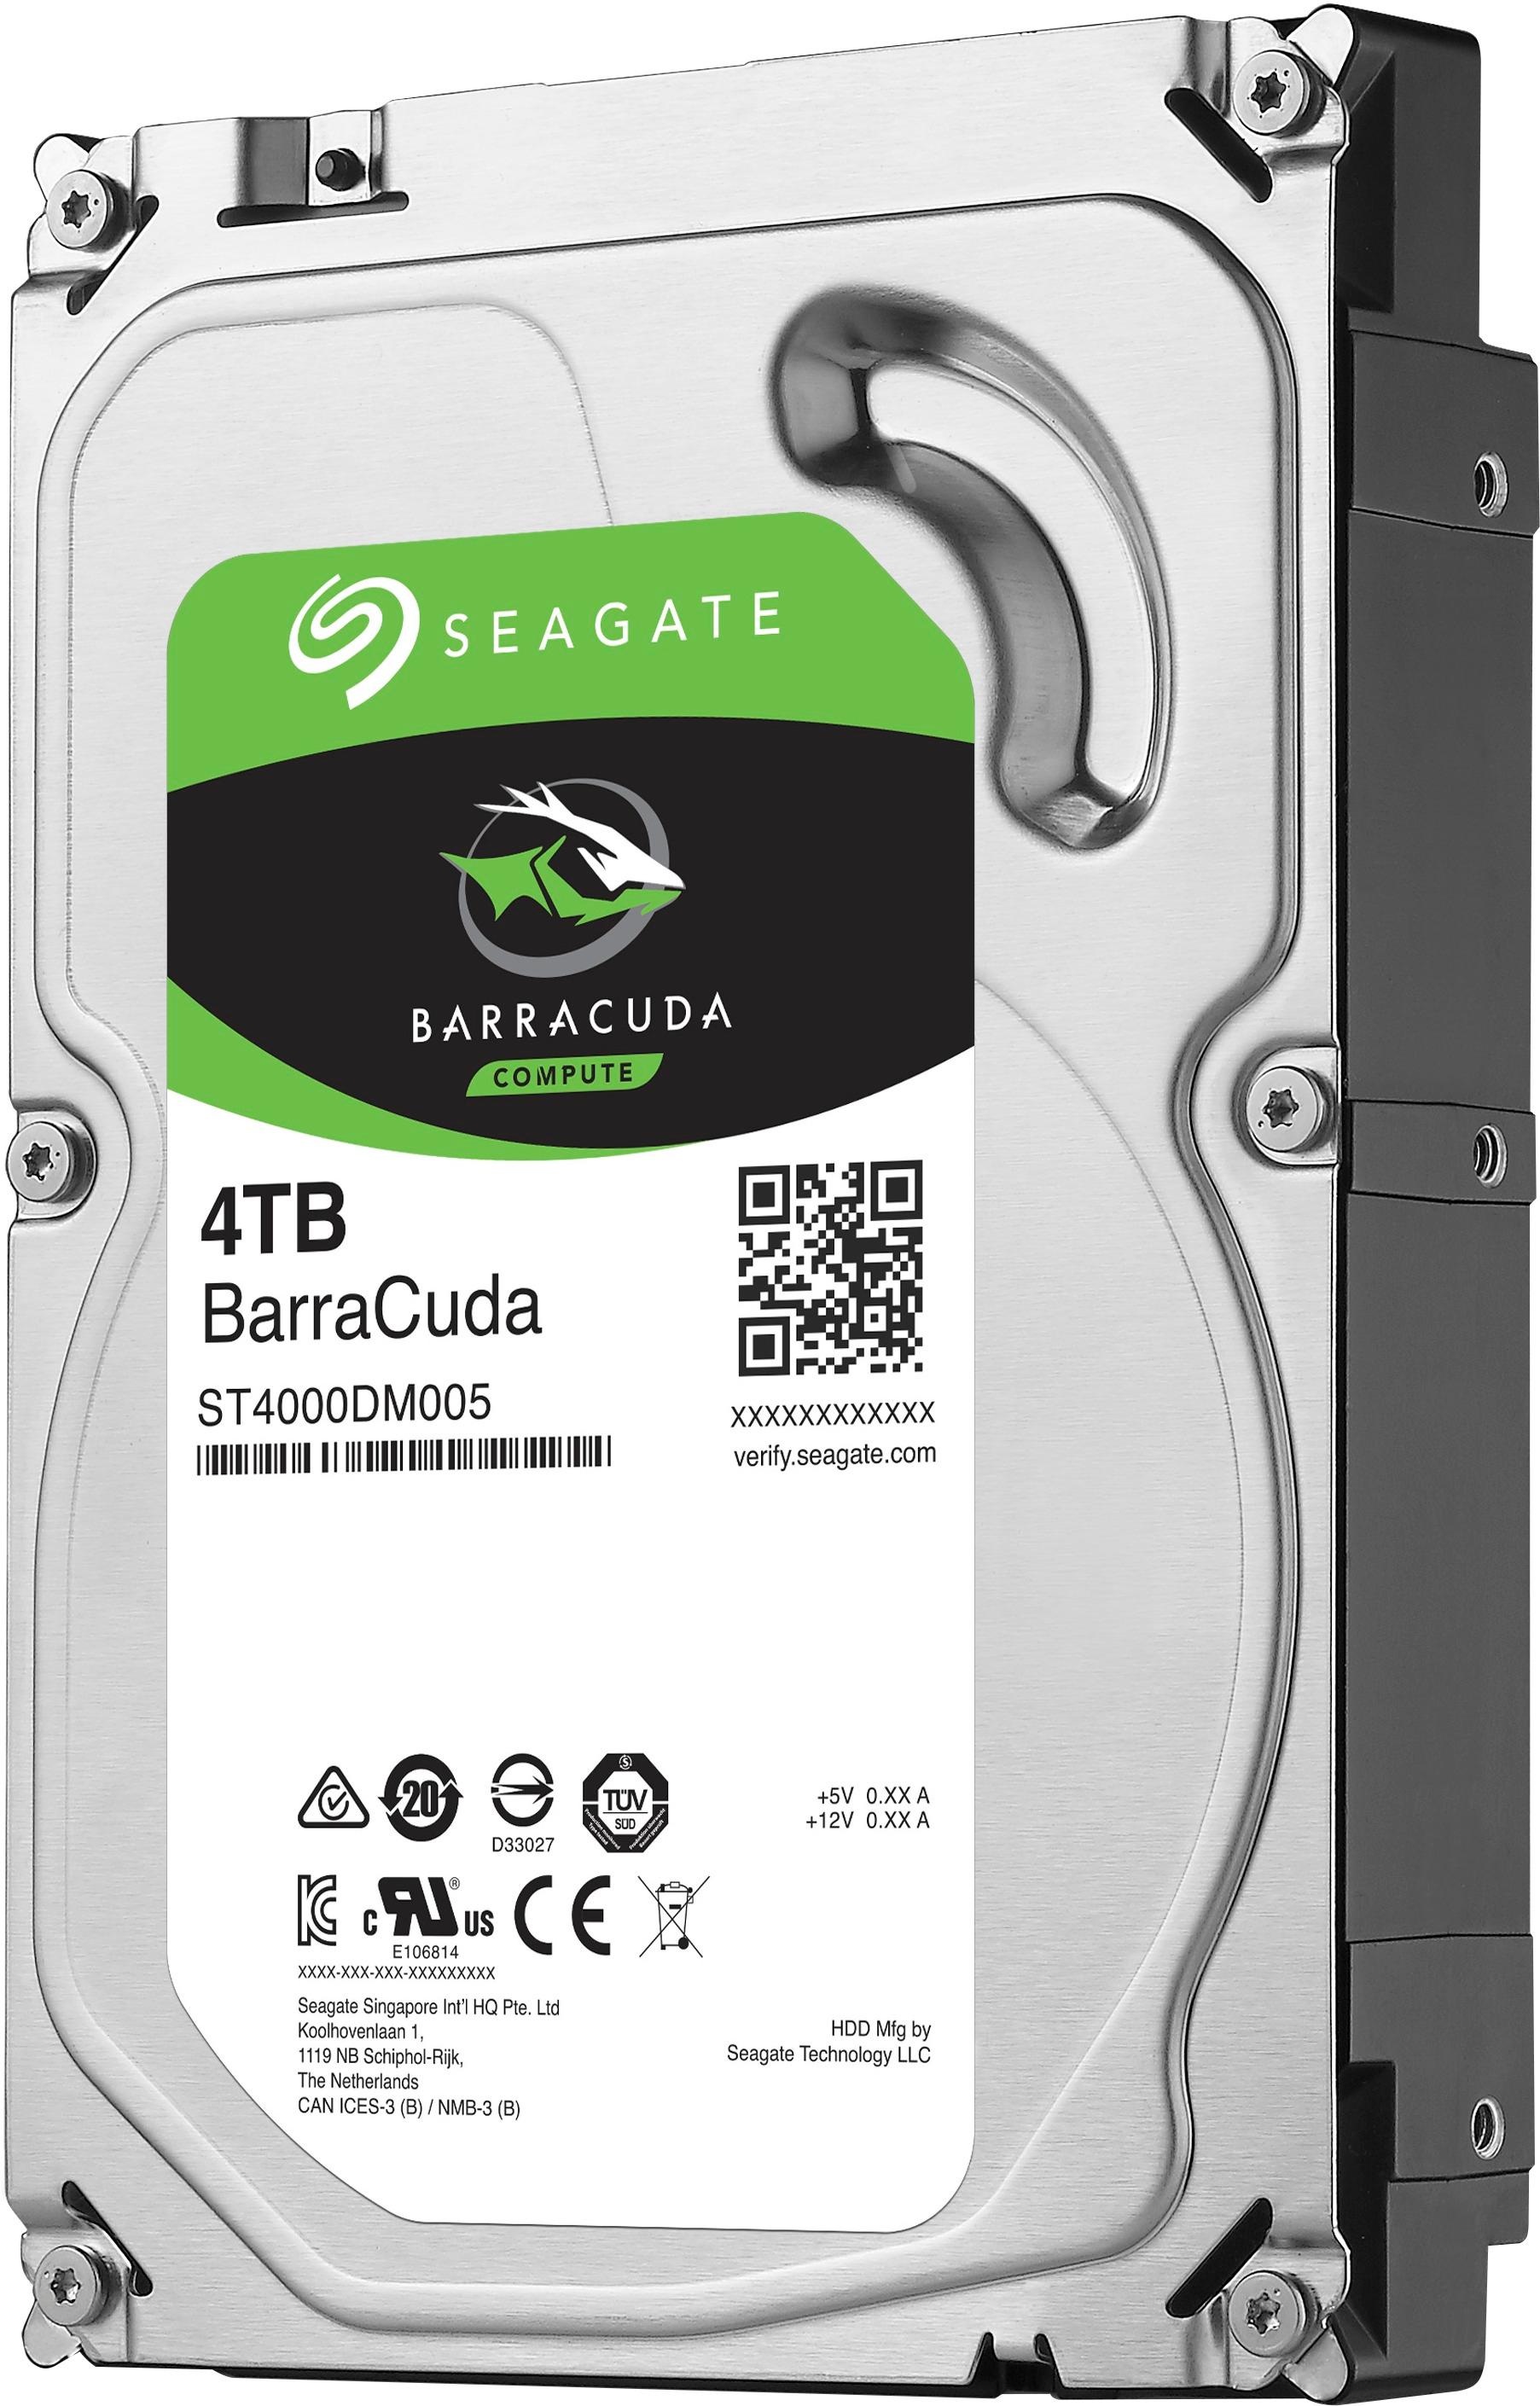 Best Buy: Seagate Barracuda 4TB Internal SATA Hard Drive for Desktops  ST4000DMA05